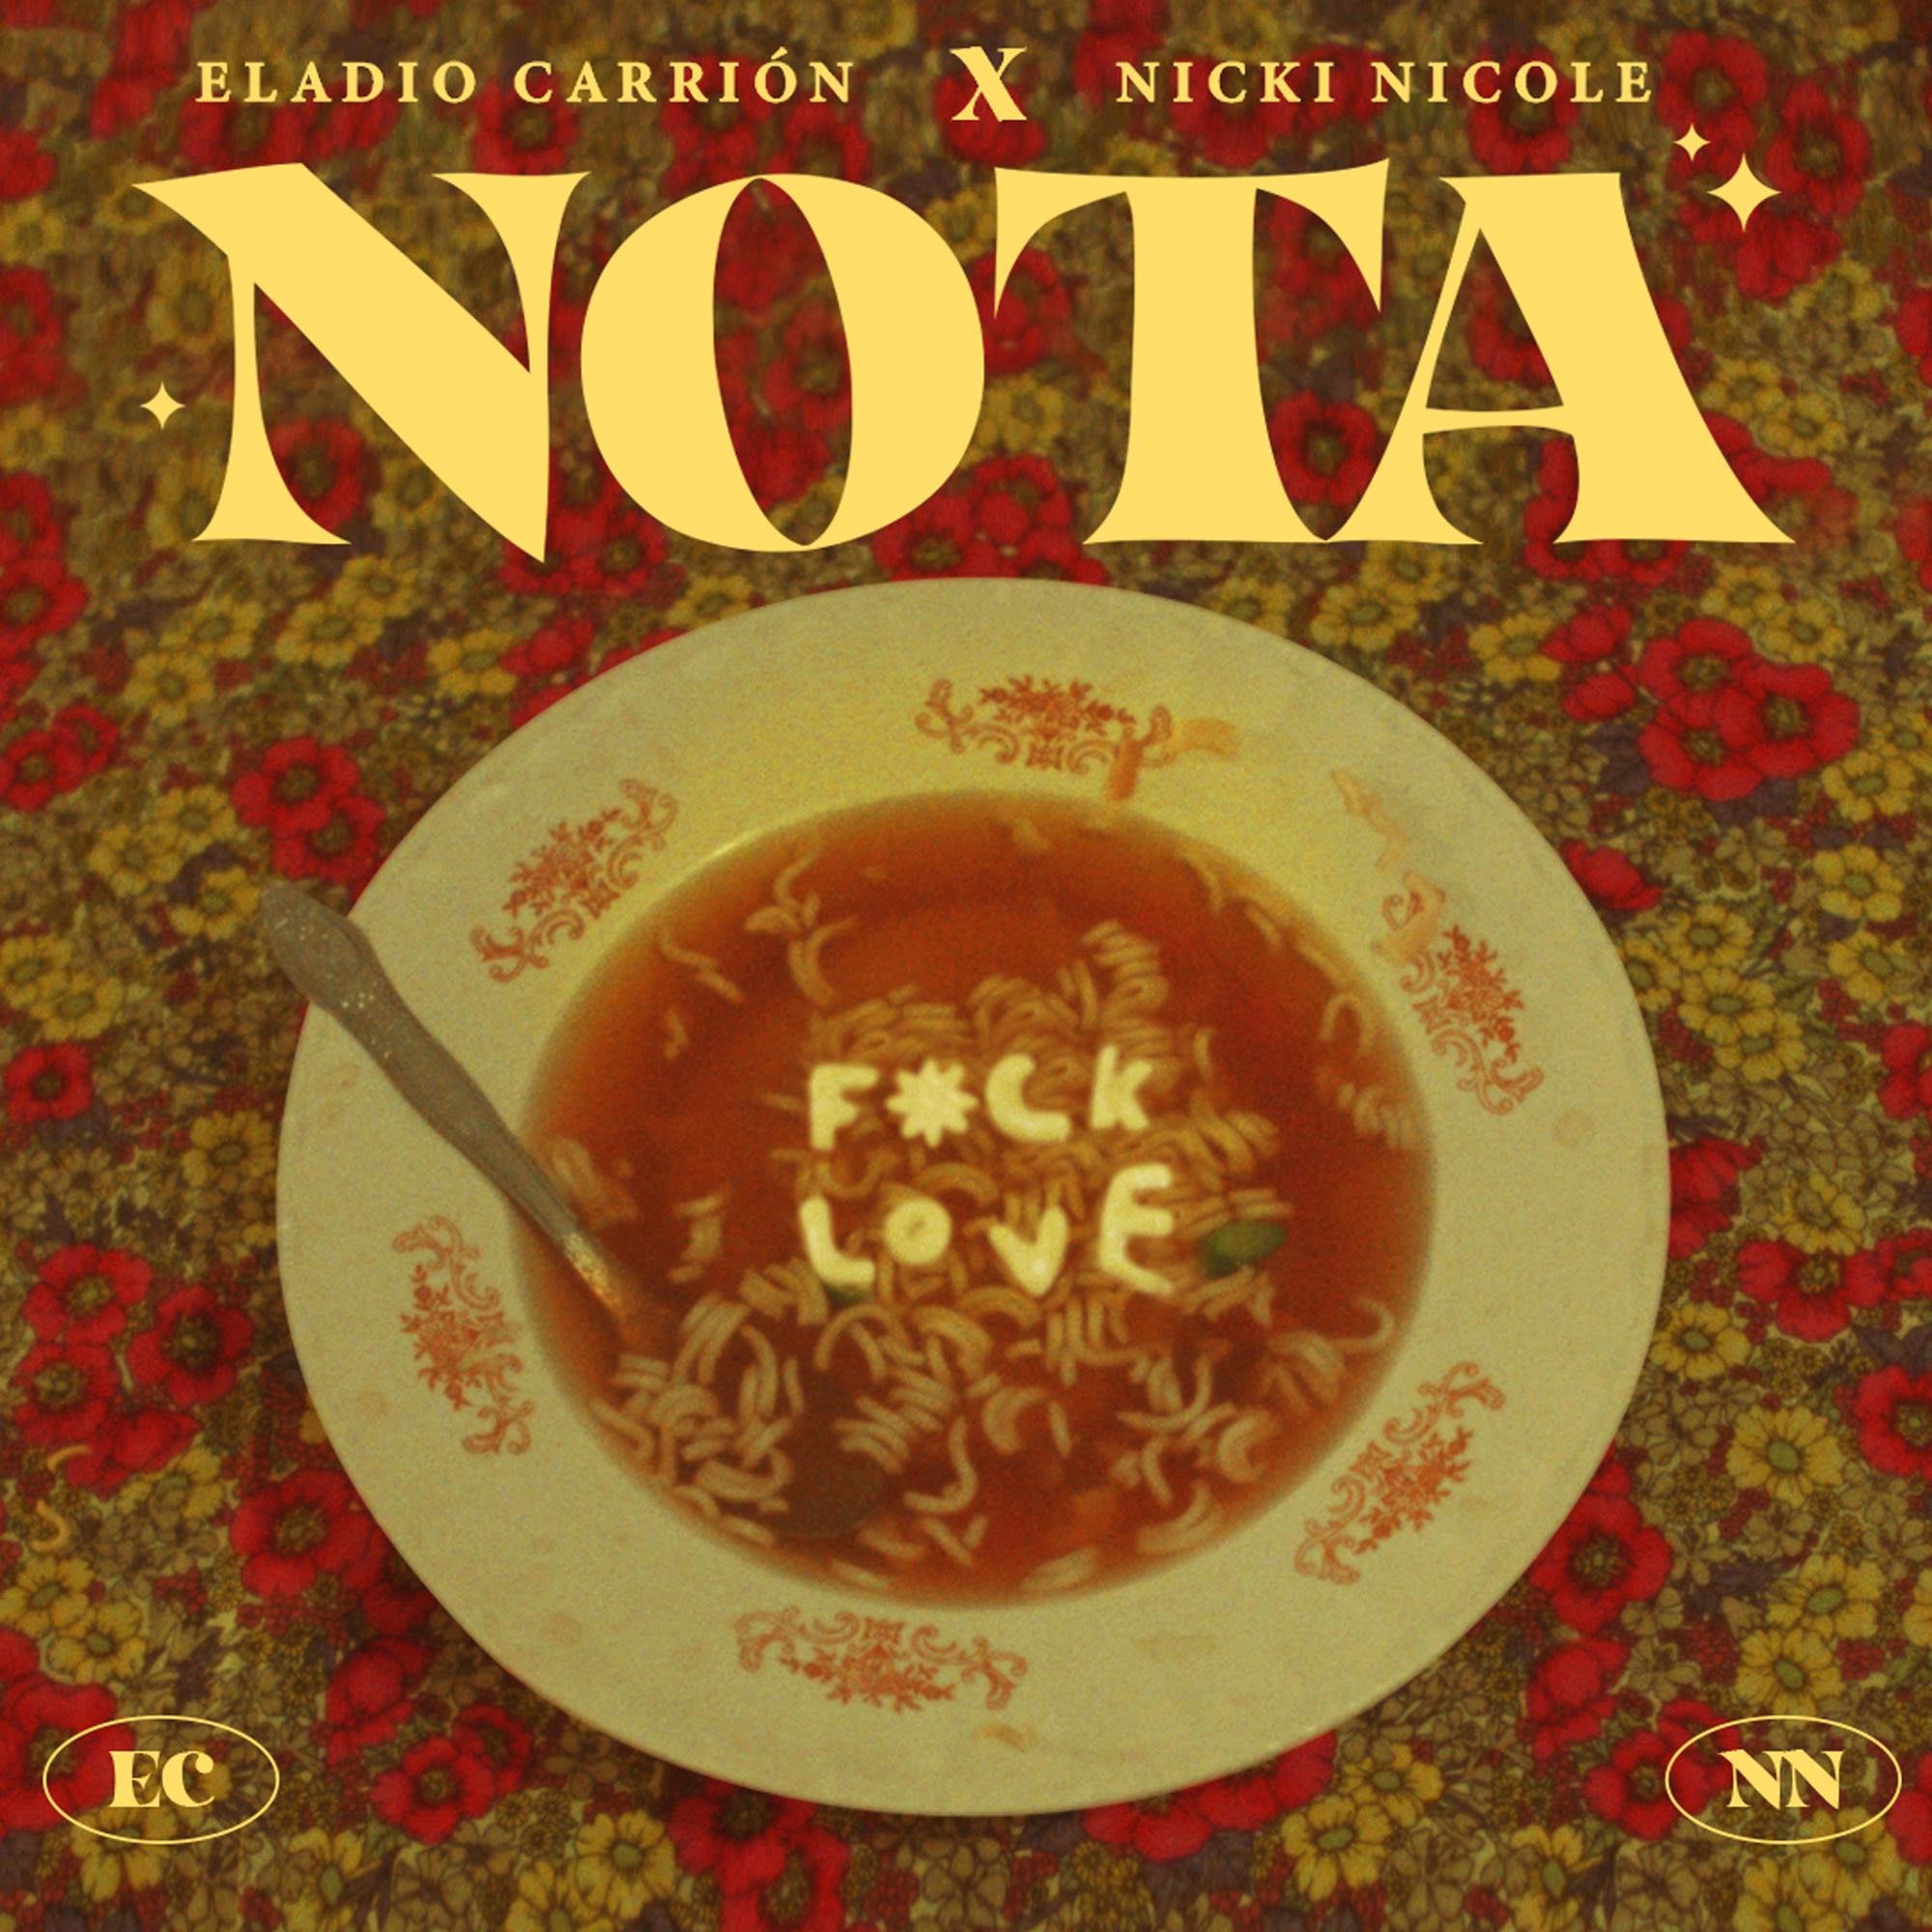 Nota - Eladio Carrión, Nicki Nicole